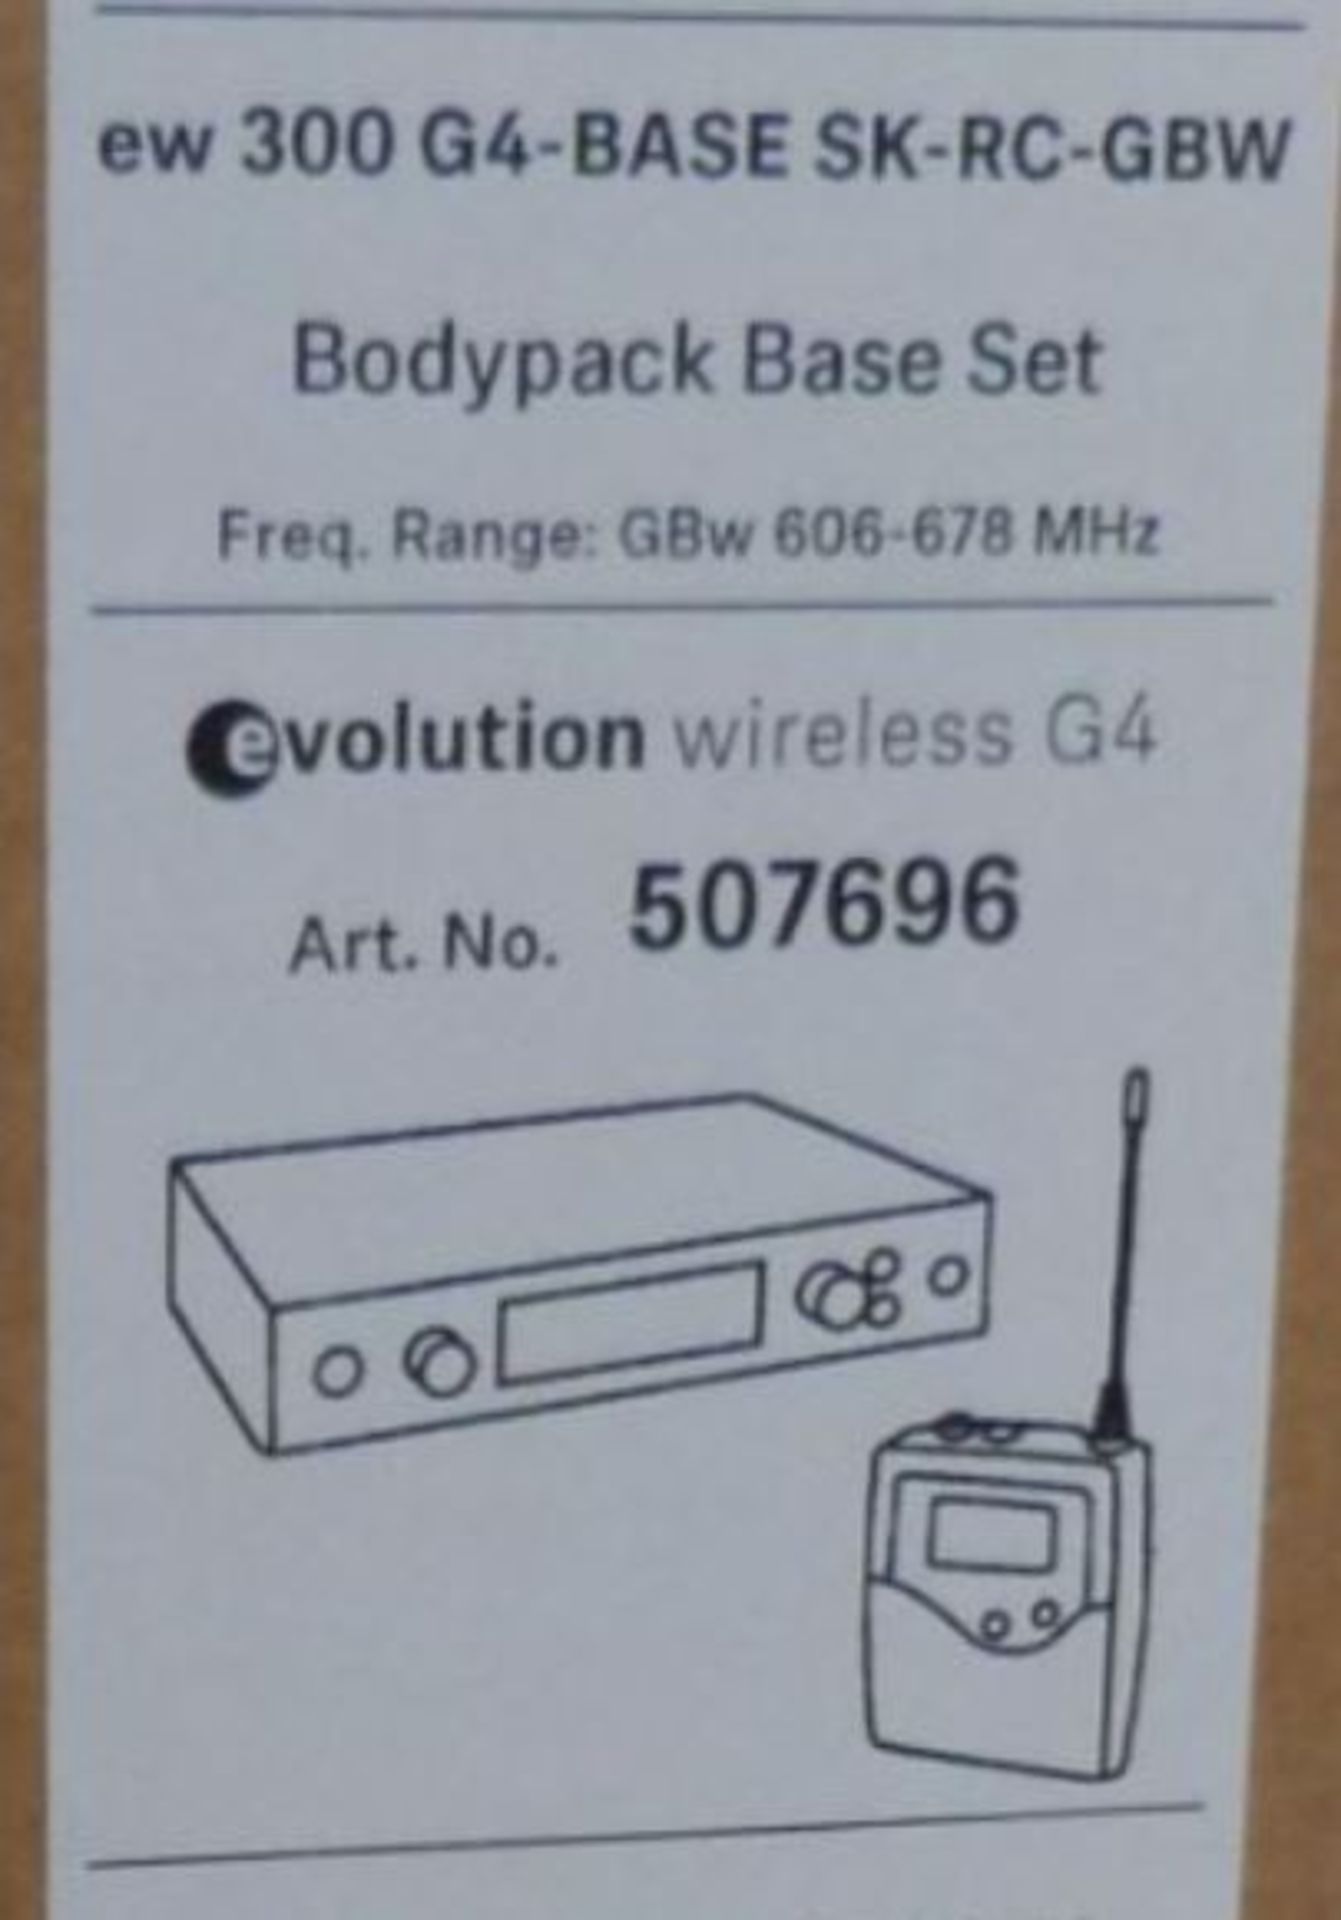 Sennheiser EW 300 G4-BASE SK-RC-GBW Bodypack Base Set 507696. In Cardboard. Serial No: 8178661169